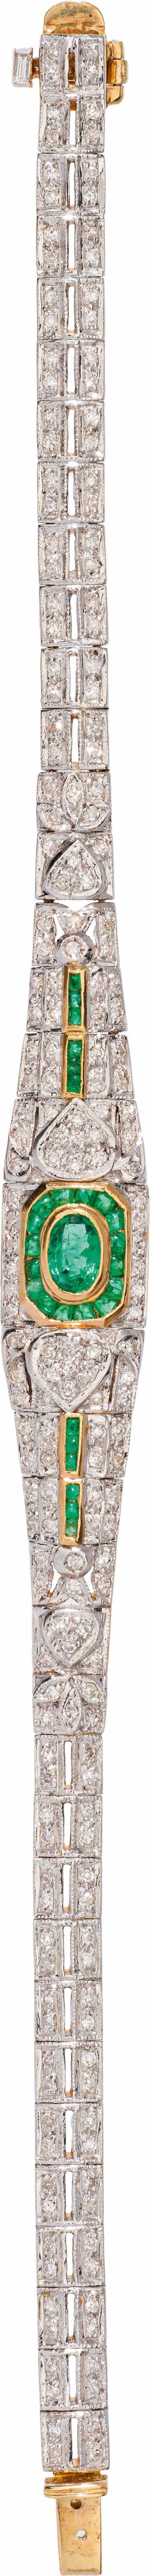 Emerald bracelet with diamonds